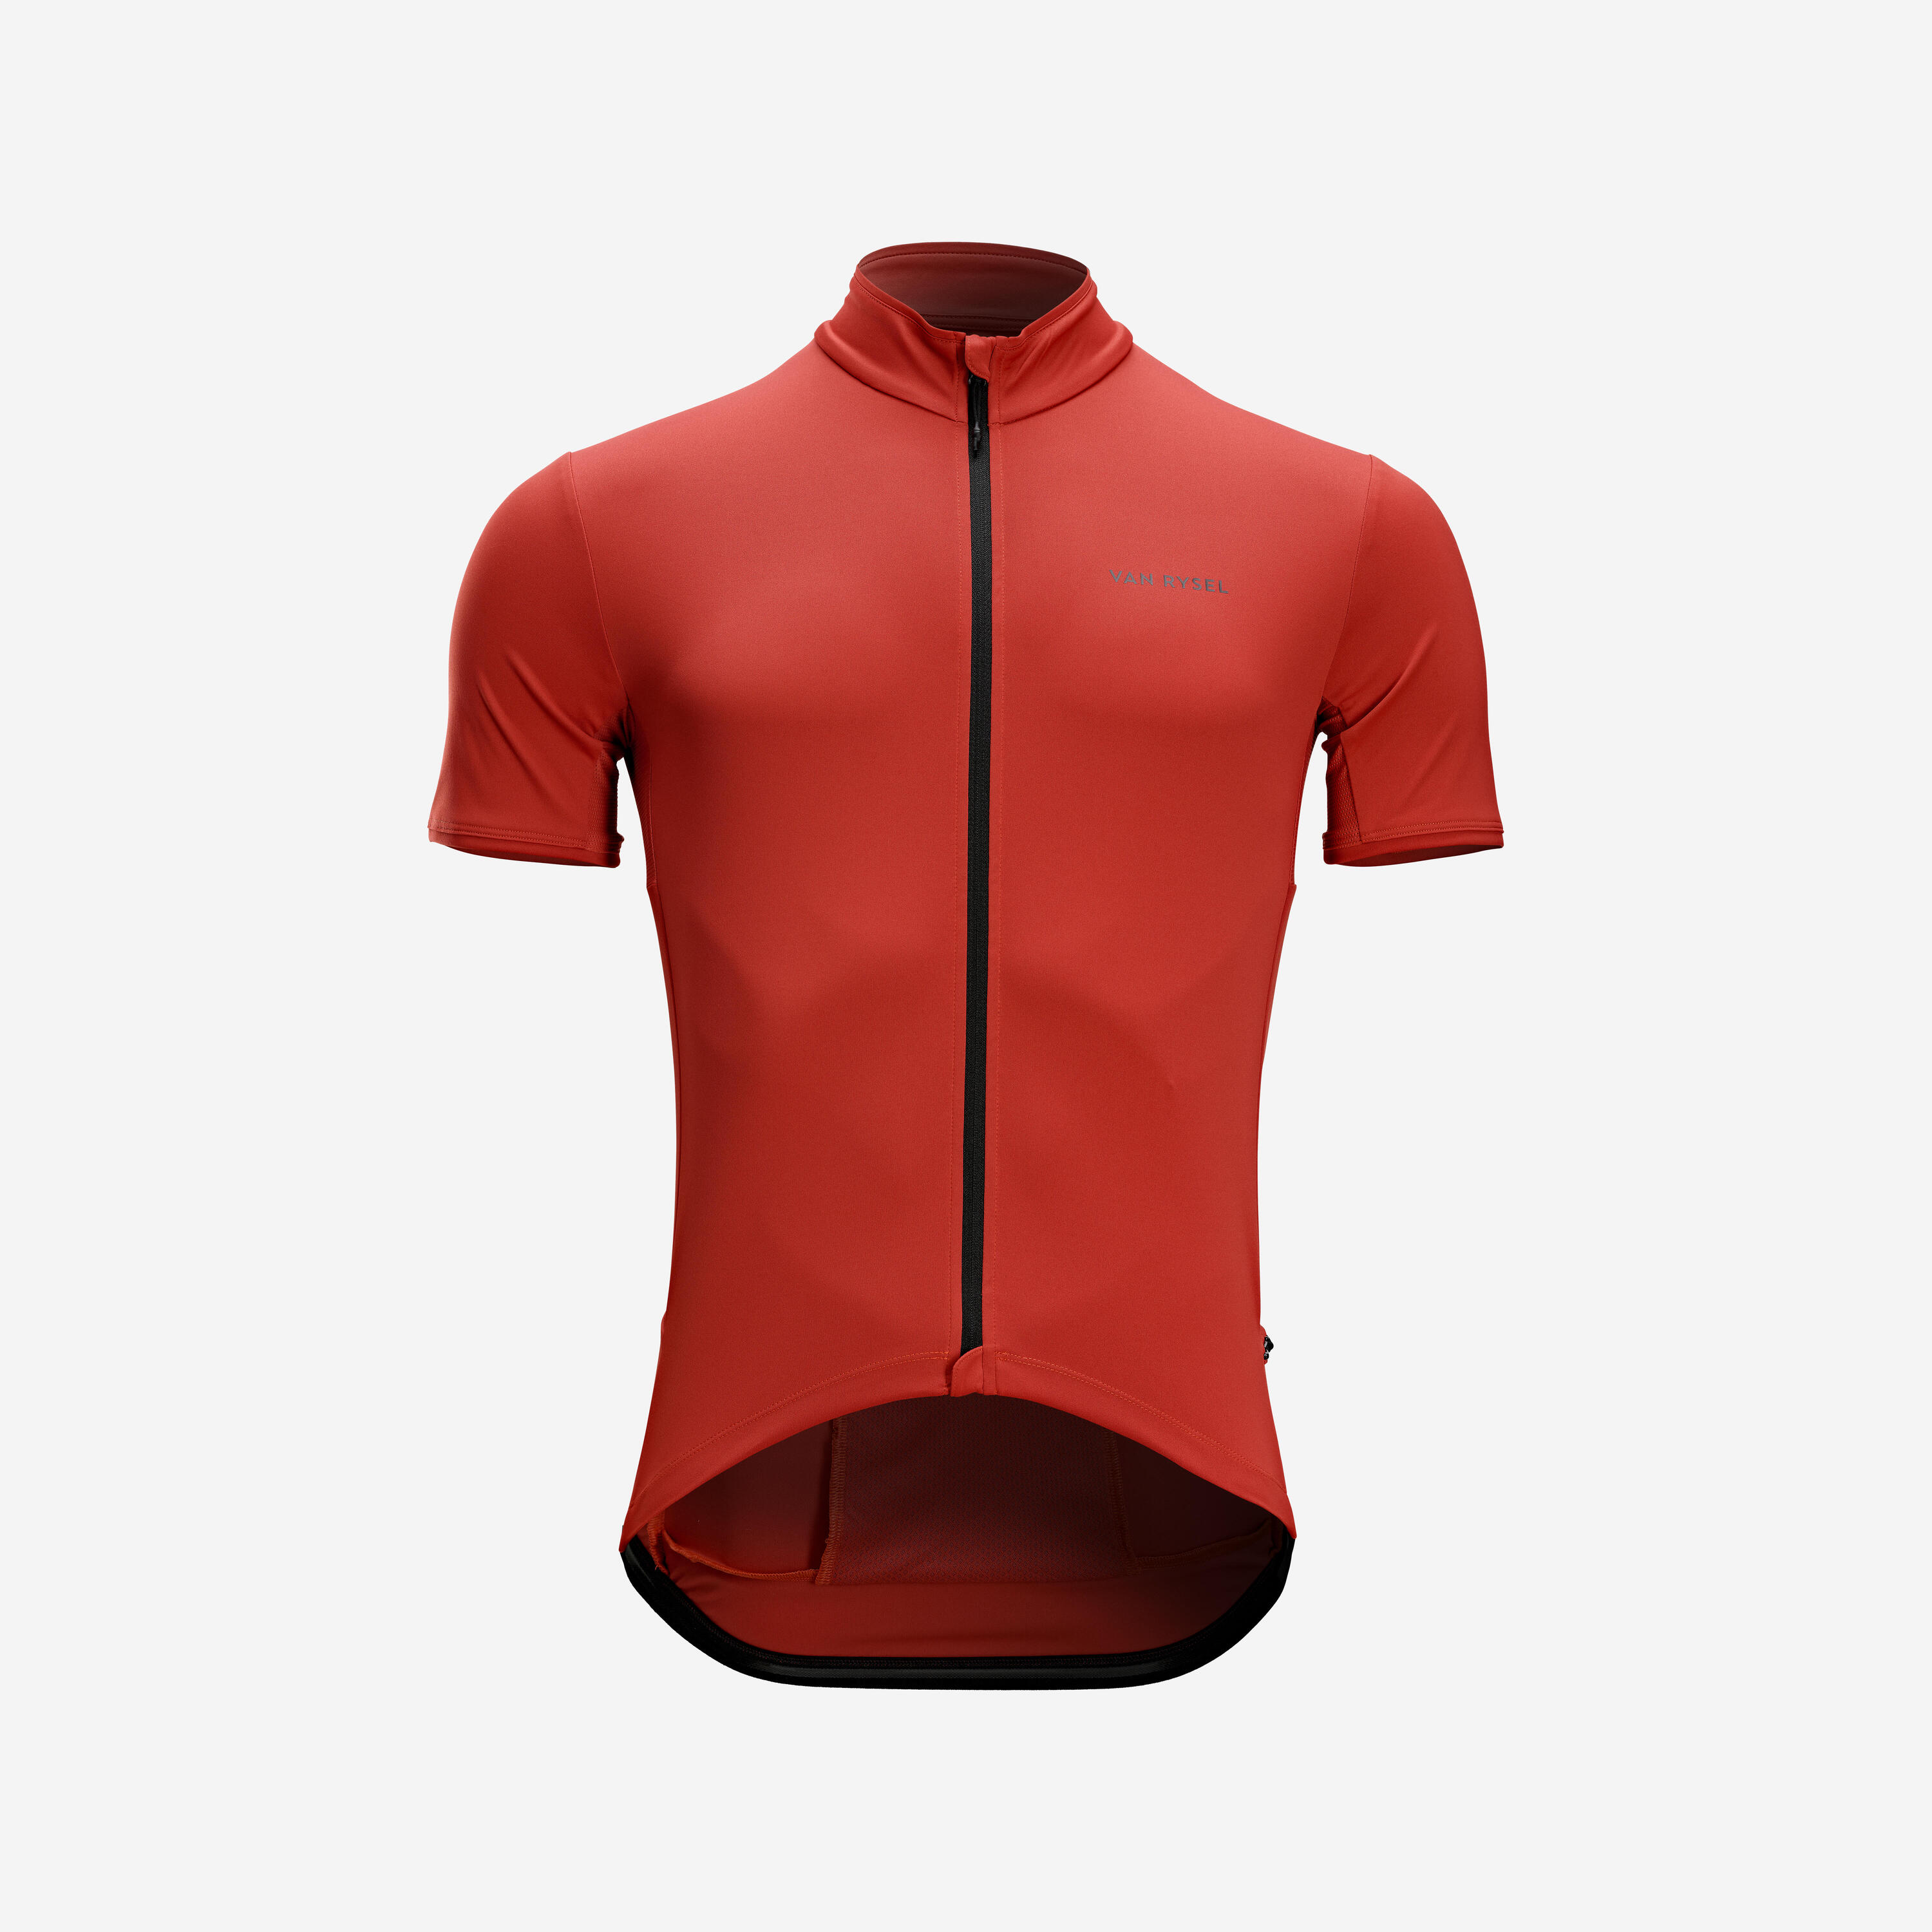 VAN RYSEL Men's Road Cycling Short-Sleeved Summer Jersey Endurance - Brick Red